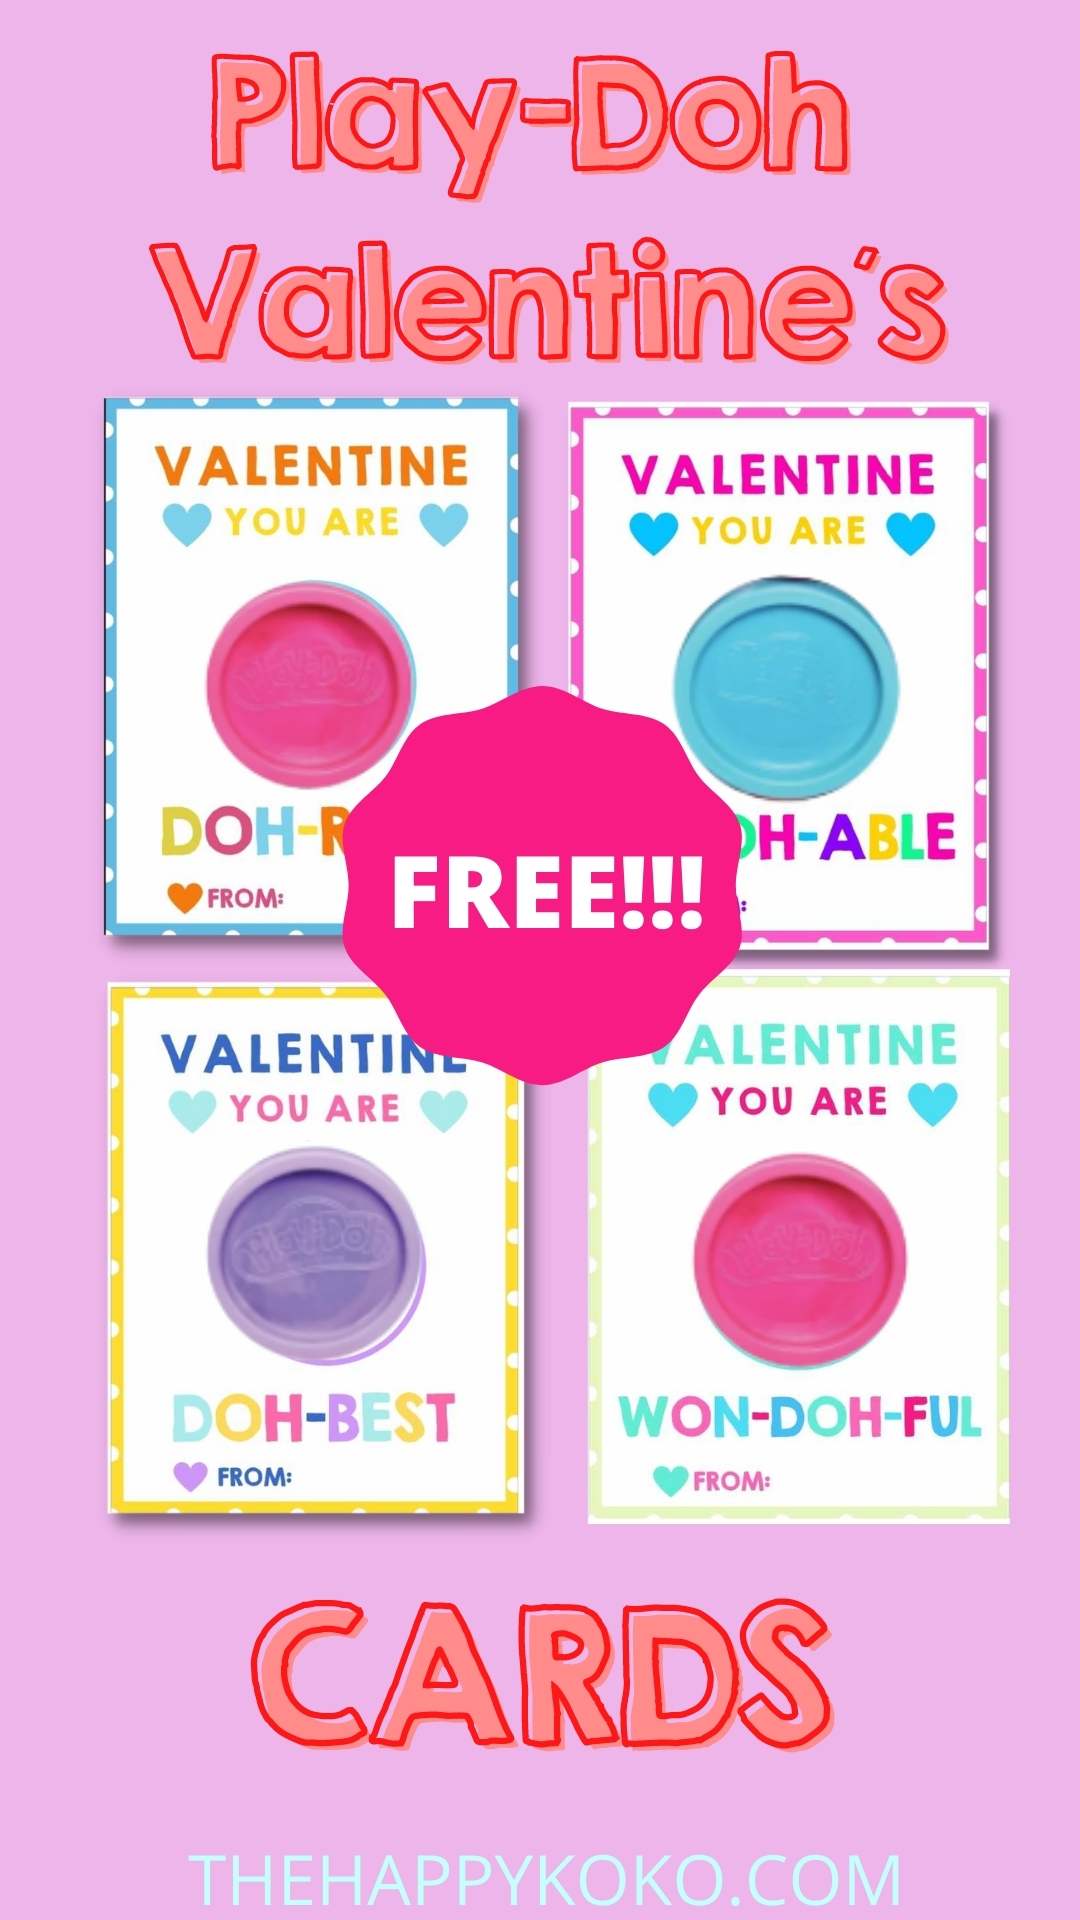 free-valentine-s-play-doh-cards-the-happy-koko